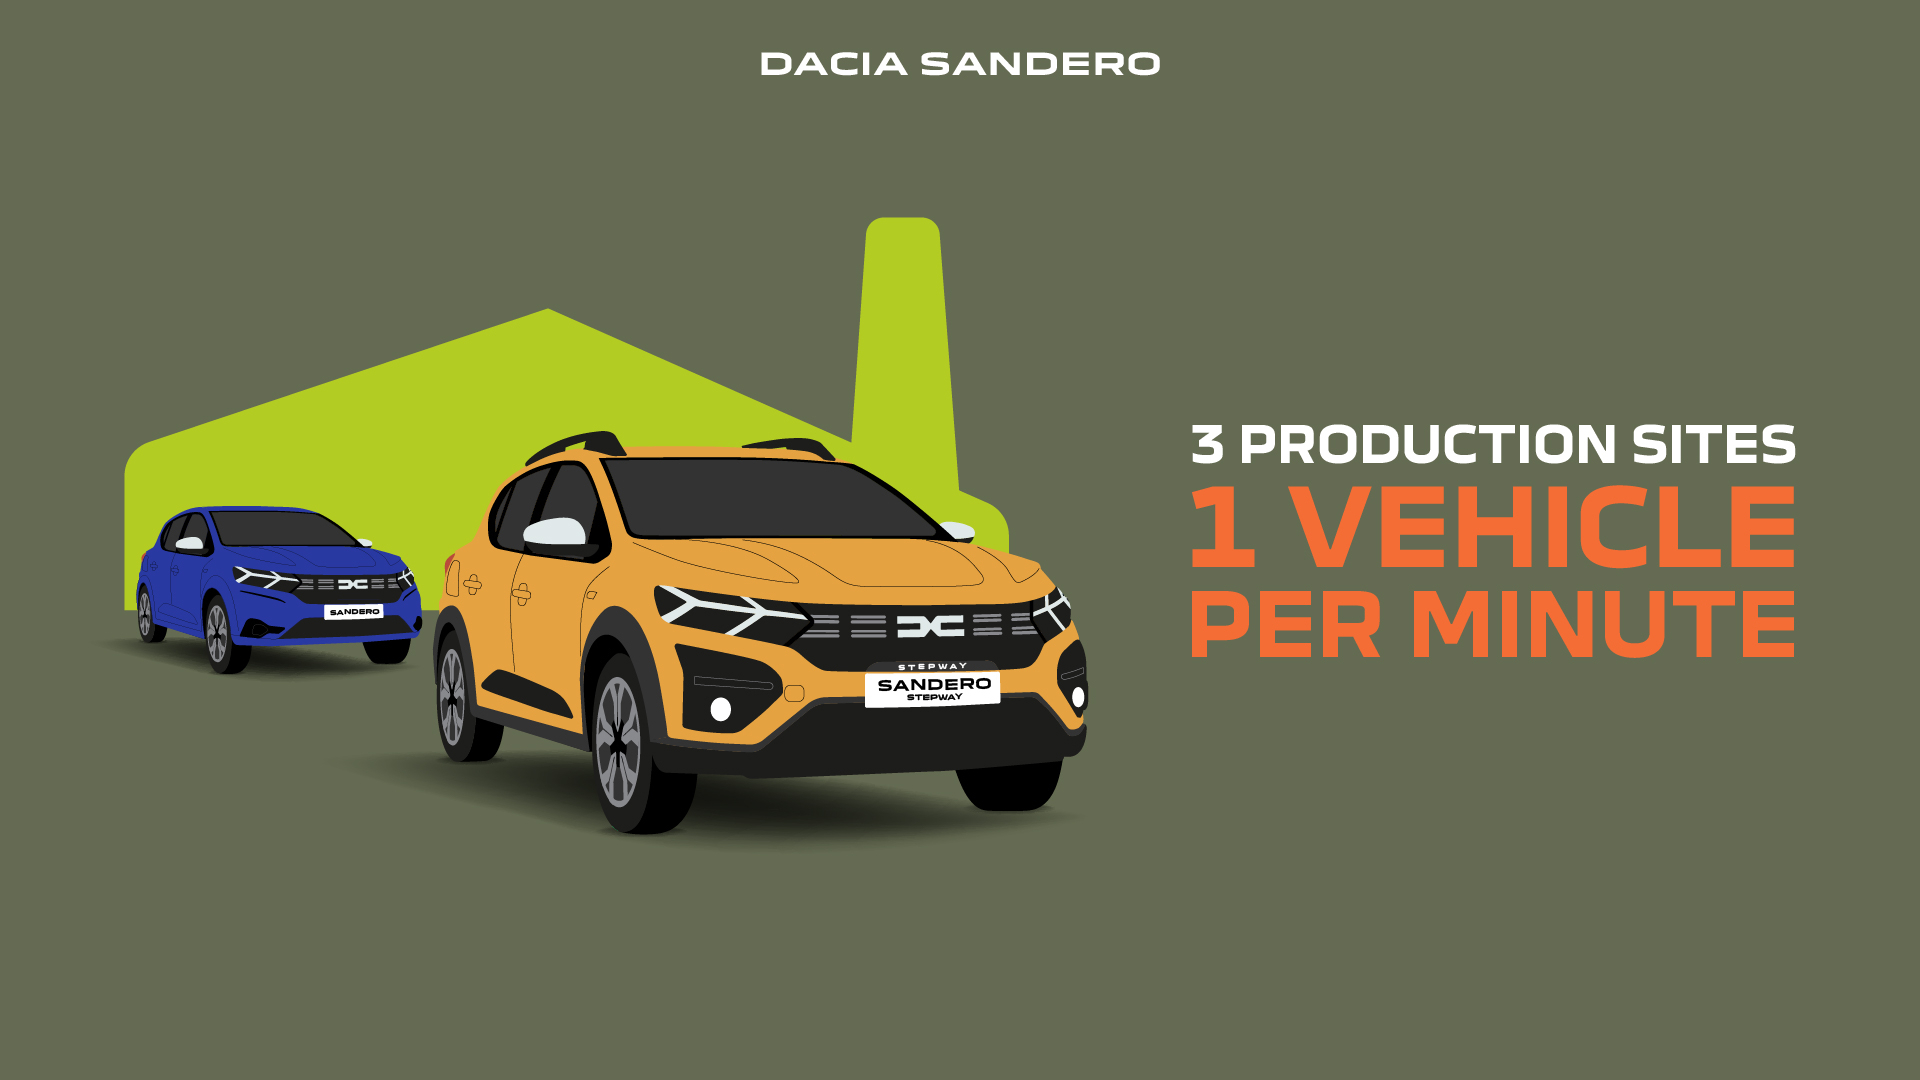 Dacia Sandero στην Automotivo